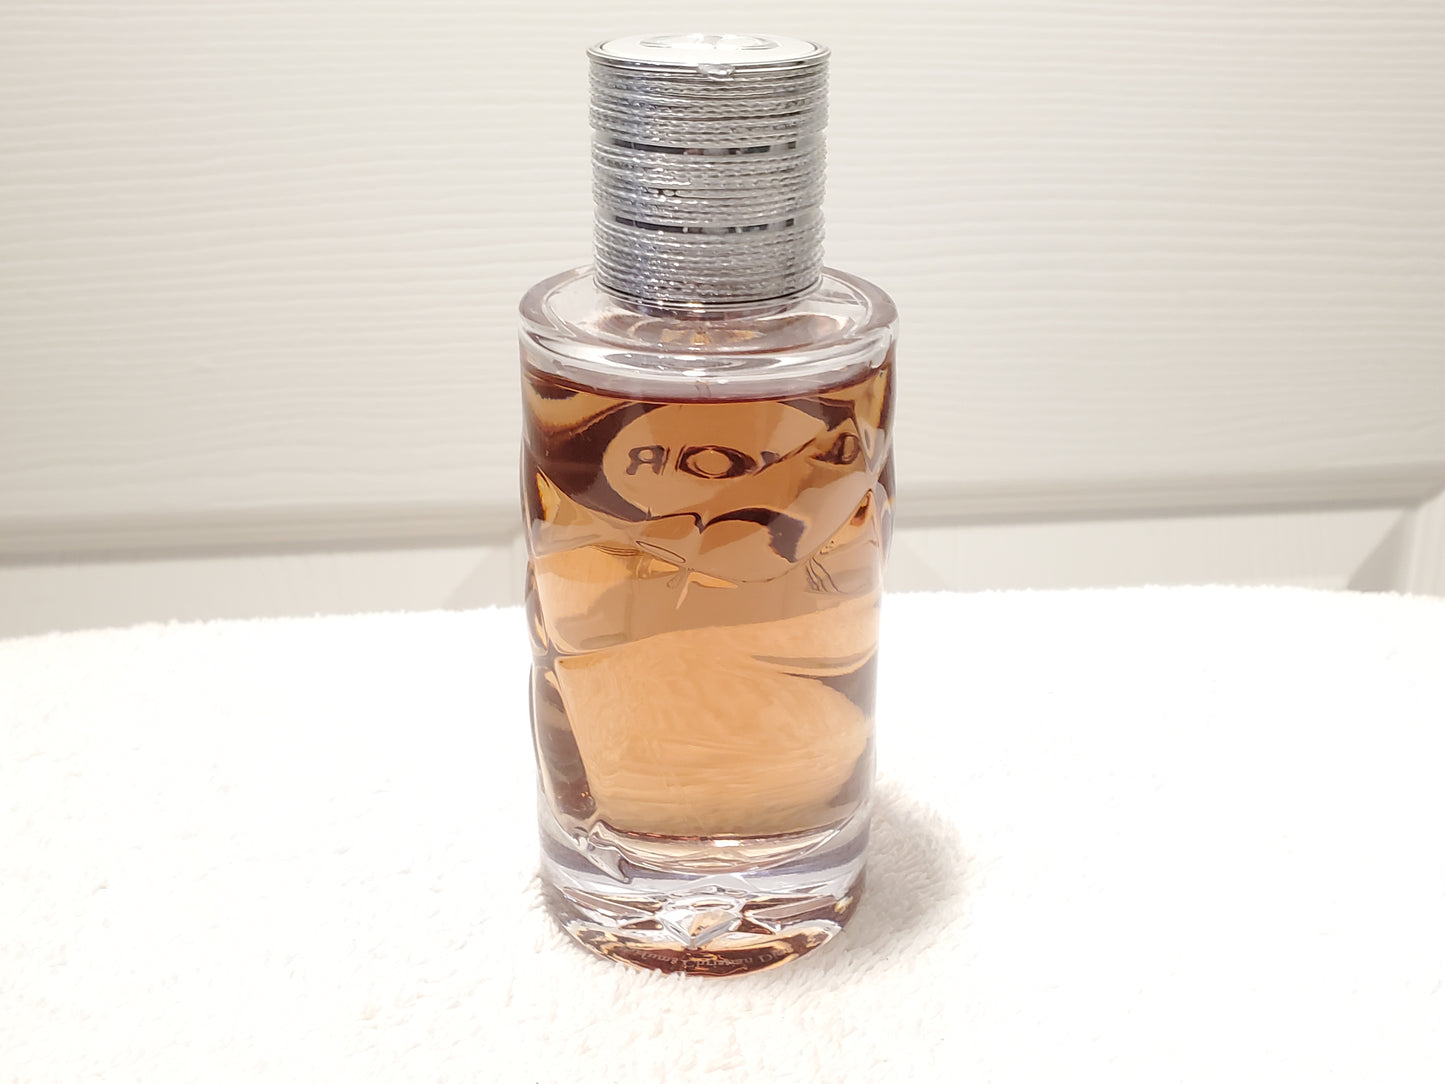 Dior Joy Eau de Parfum Intense by Christian Dior Women's Perfume Spray 3 oz Bottle